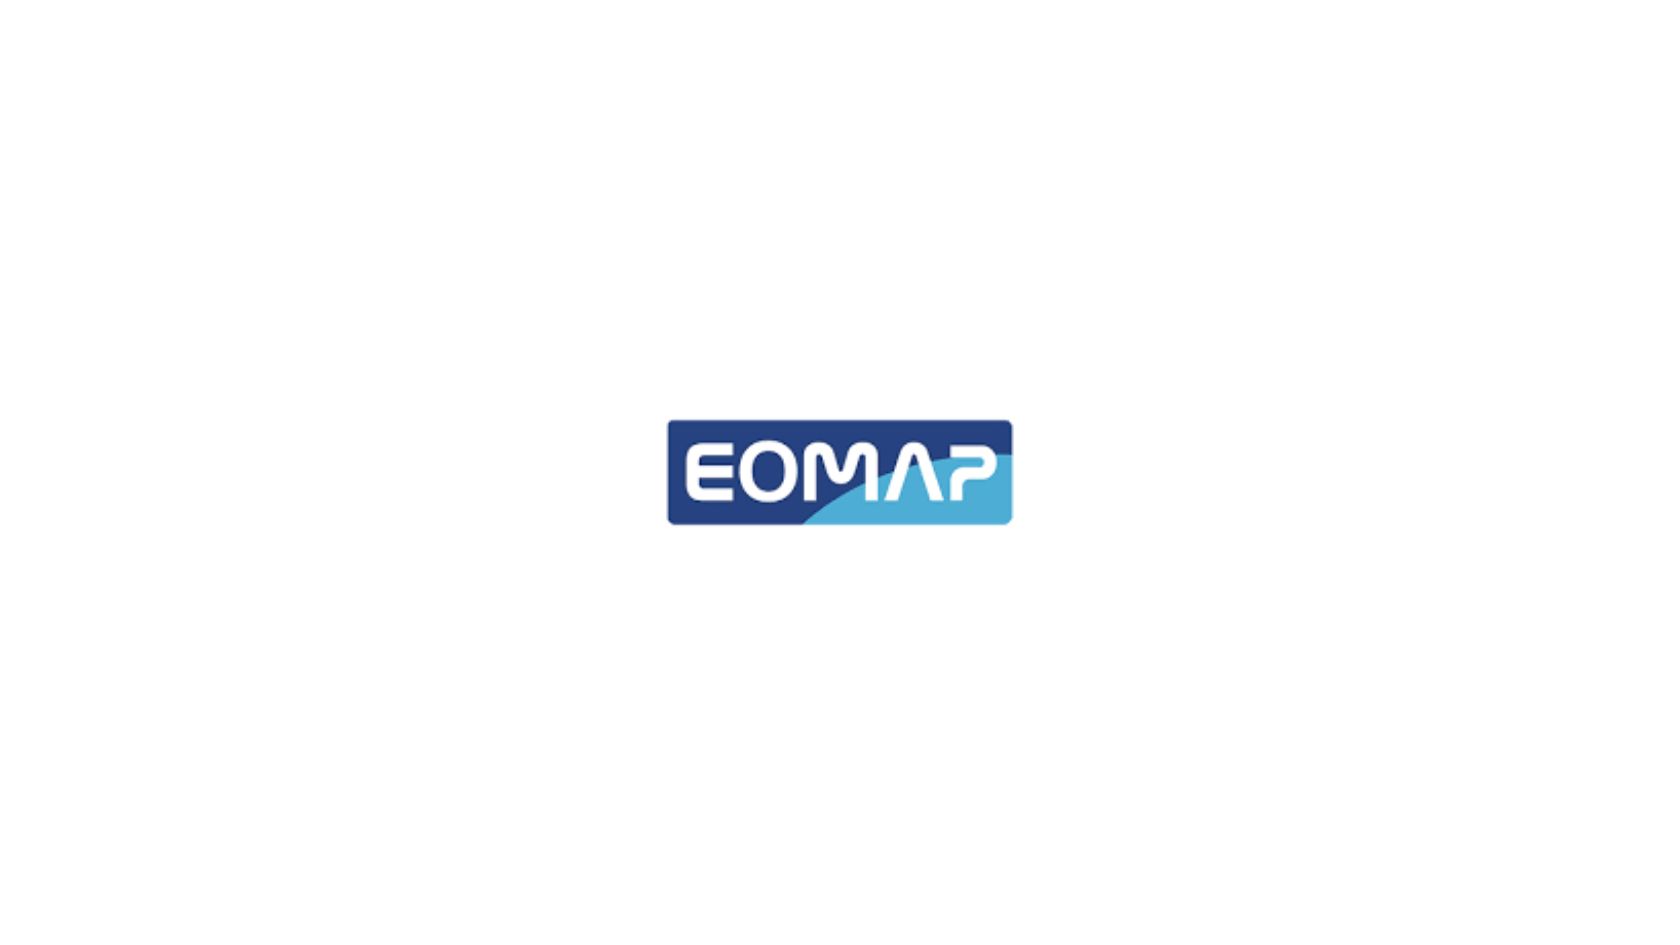 Three innovation awards for EOMAP